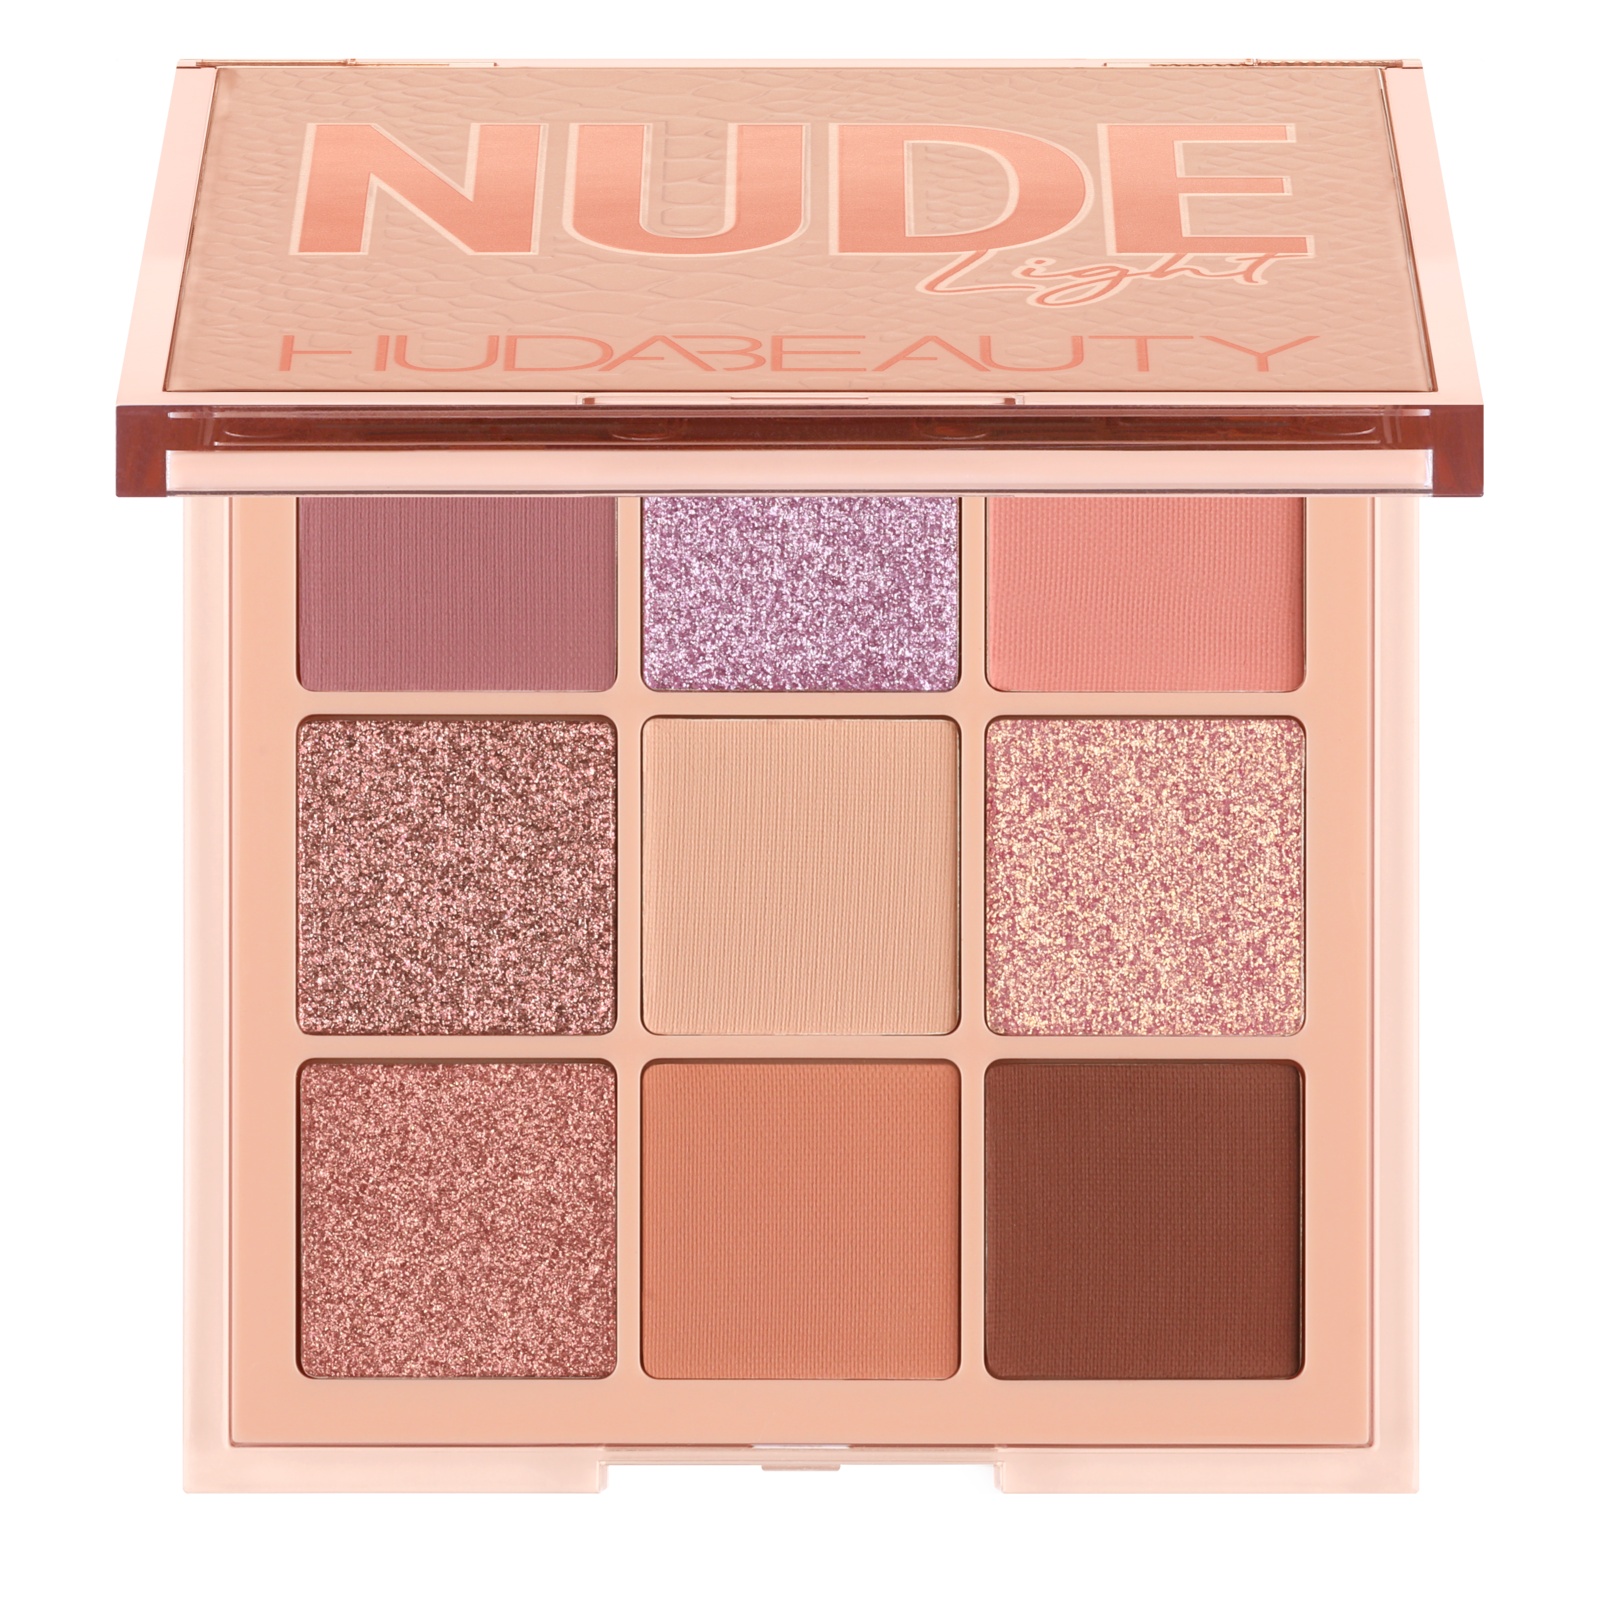 Huda Beauty - Light Nude Obsessions Eyeshadow Palette